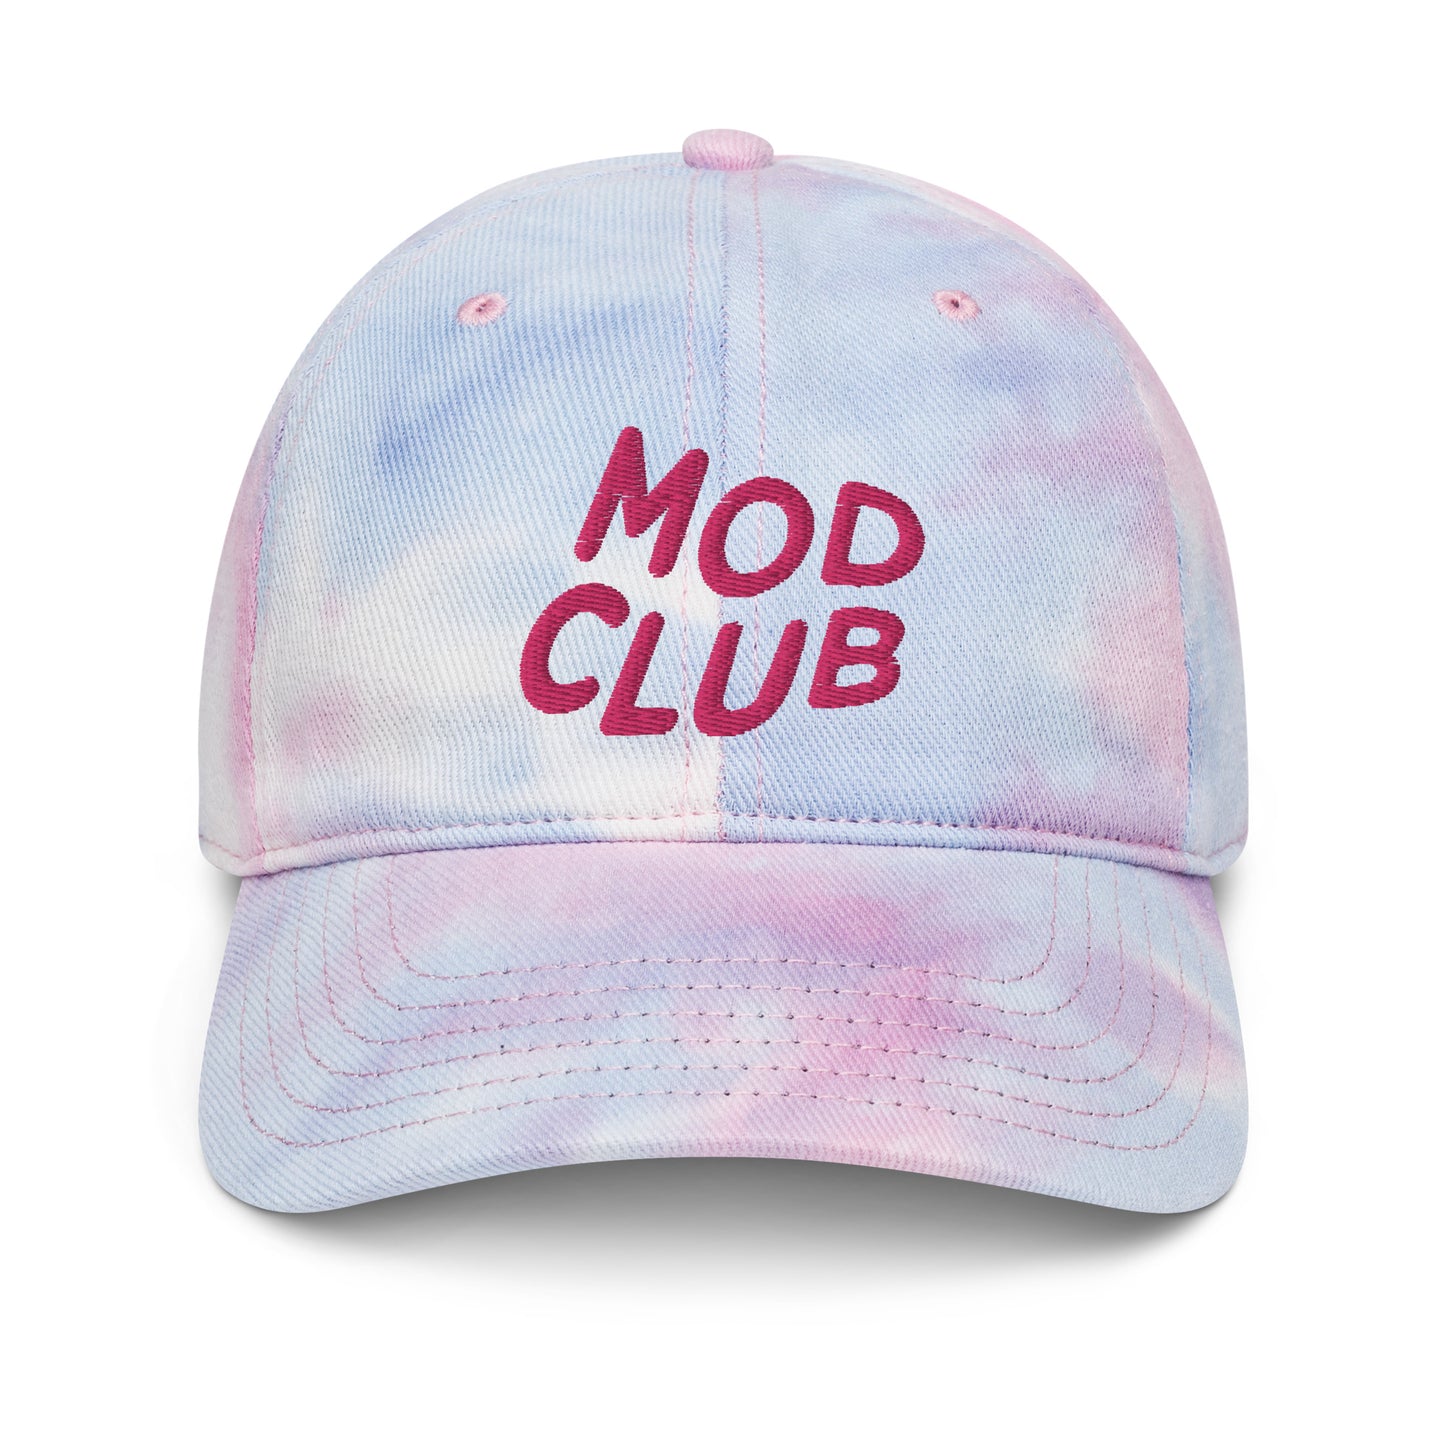 Mod Club Tie-Dye Hat